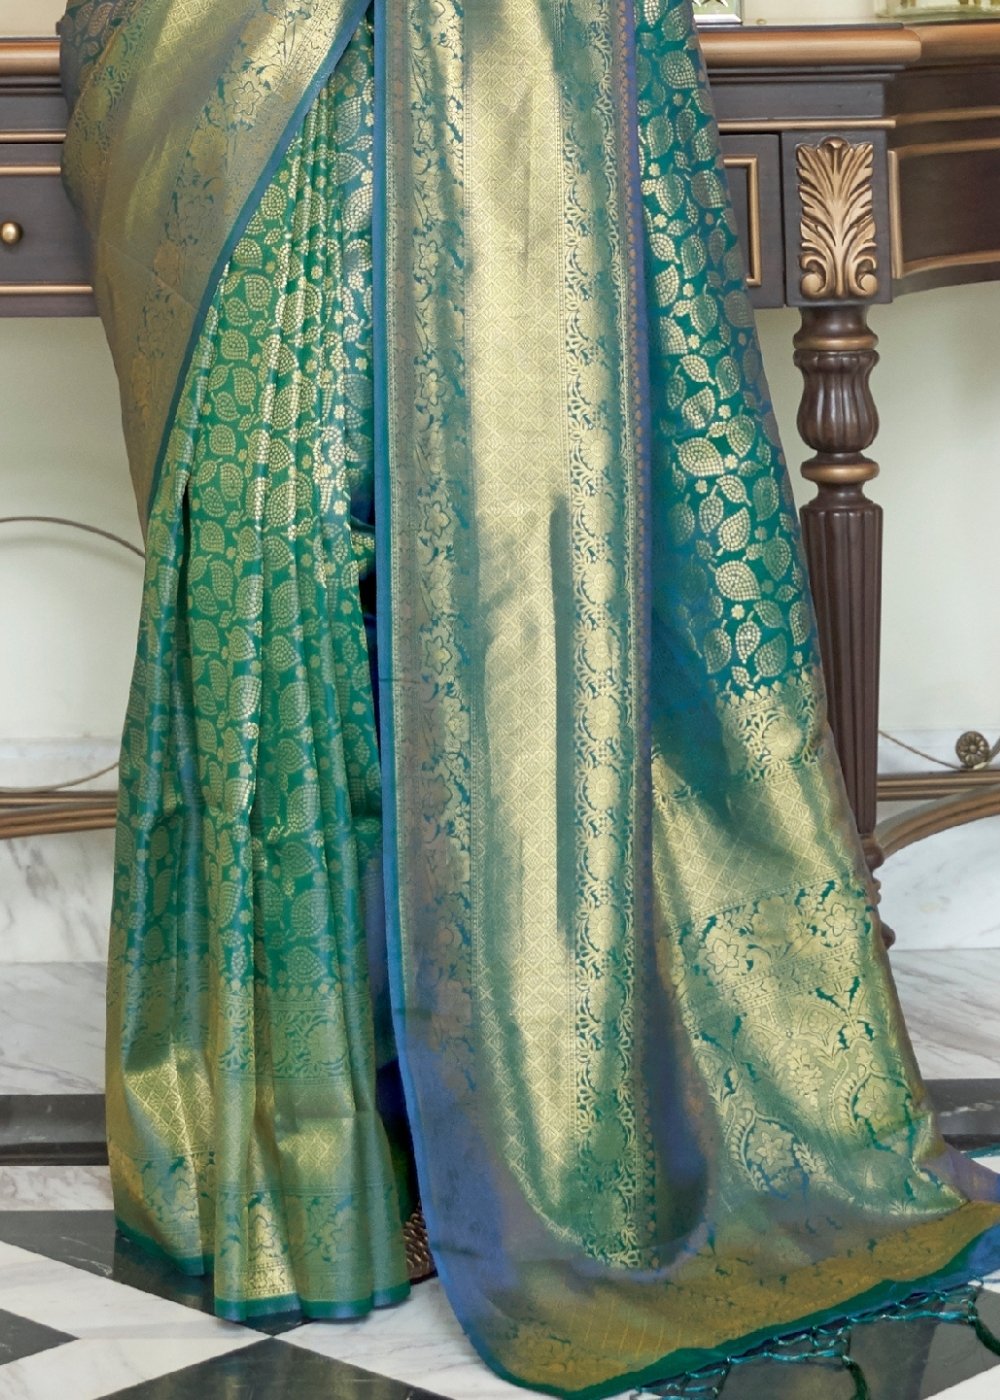 Castleton Green Zari Woven Kanjivaram Silk Saree with Tassels on Pallu - Colorful Saree